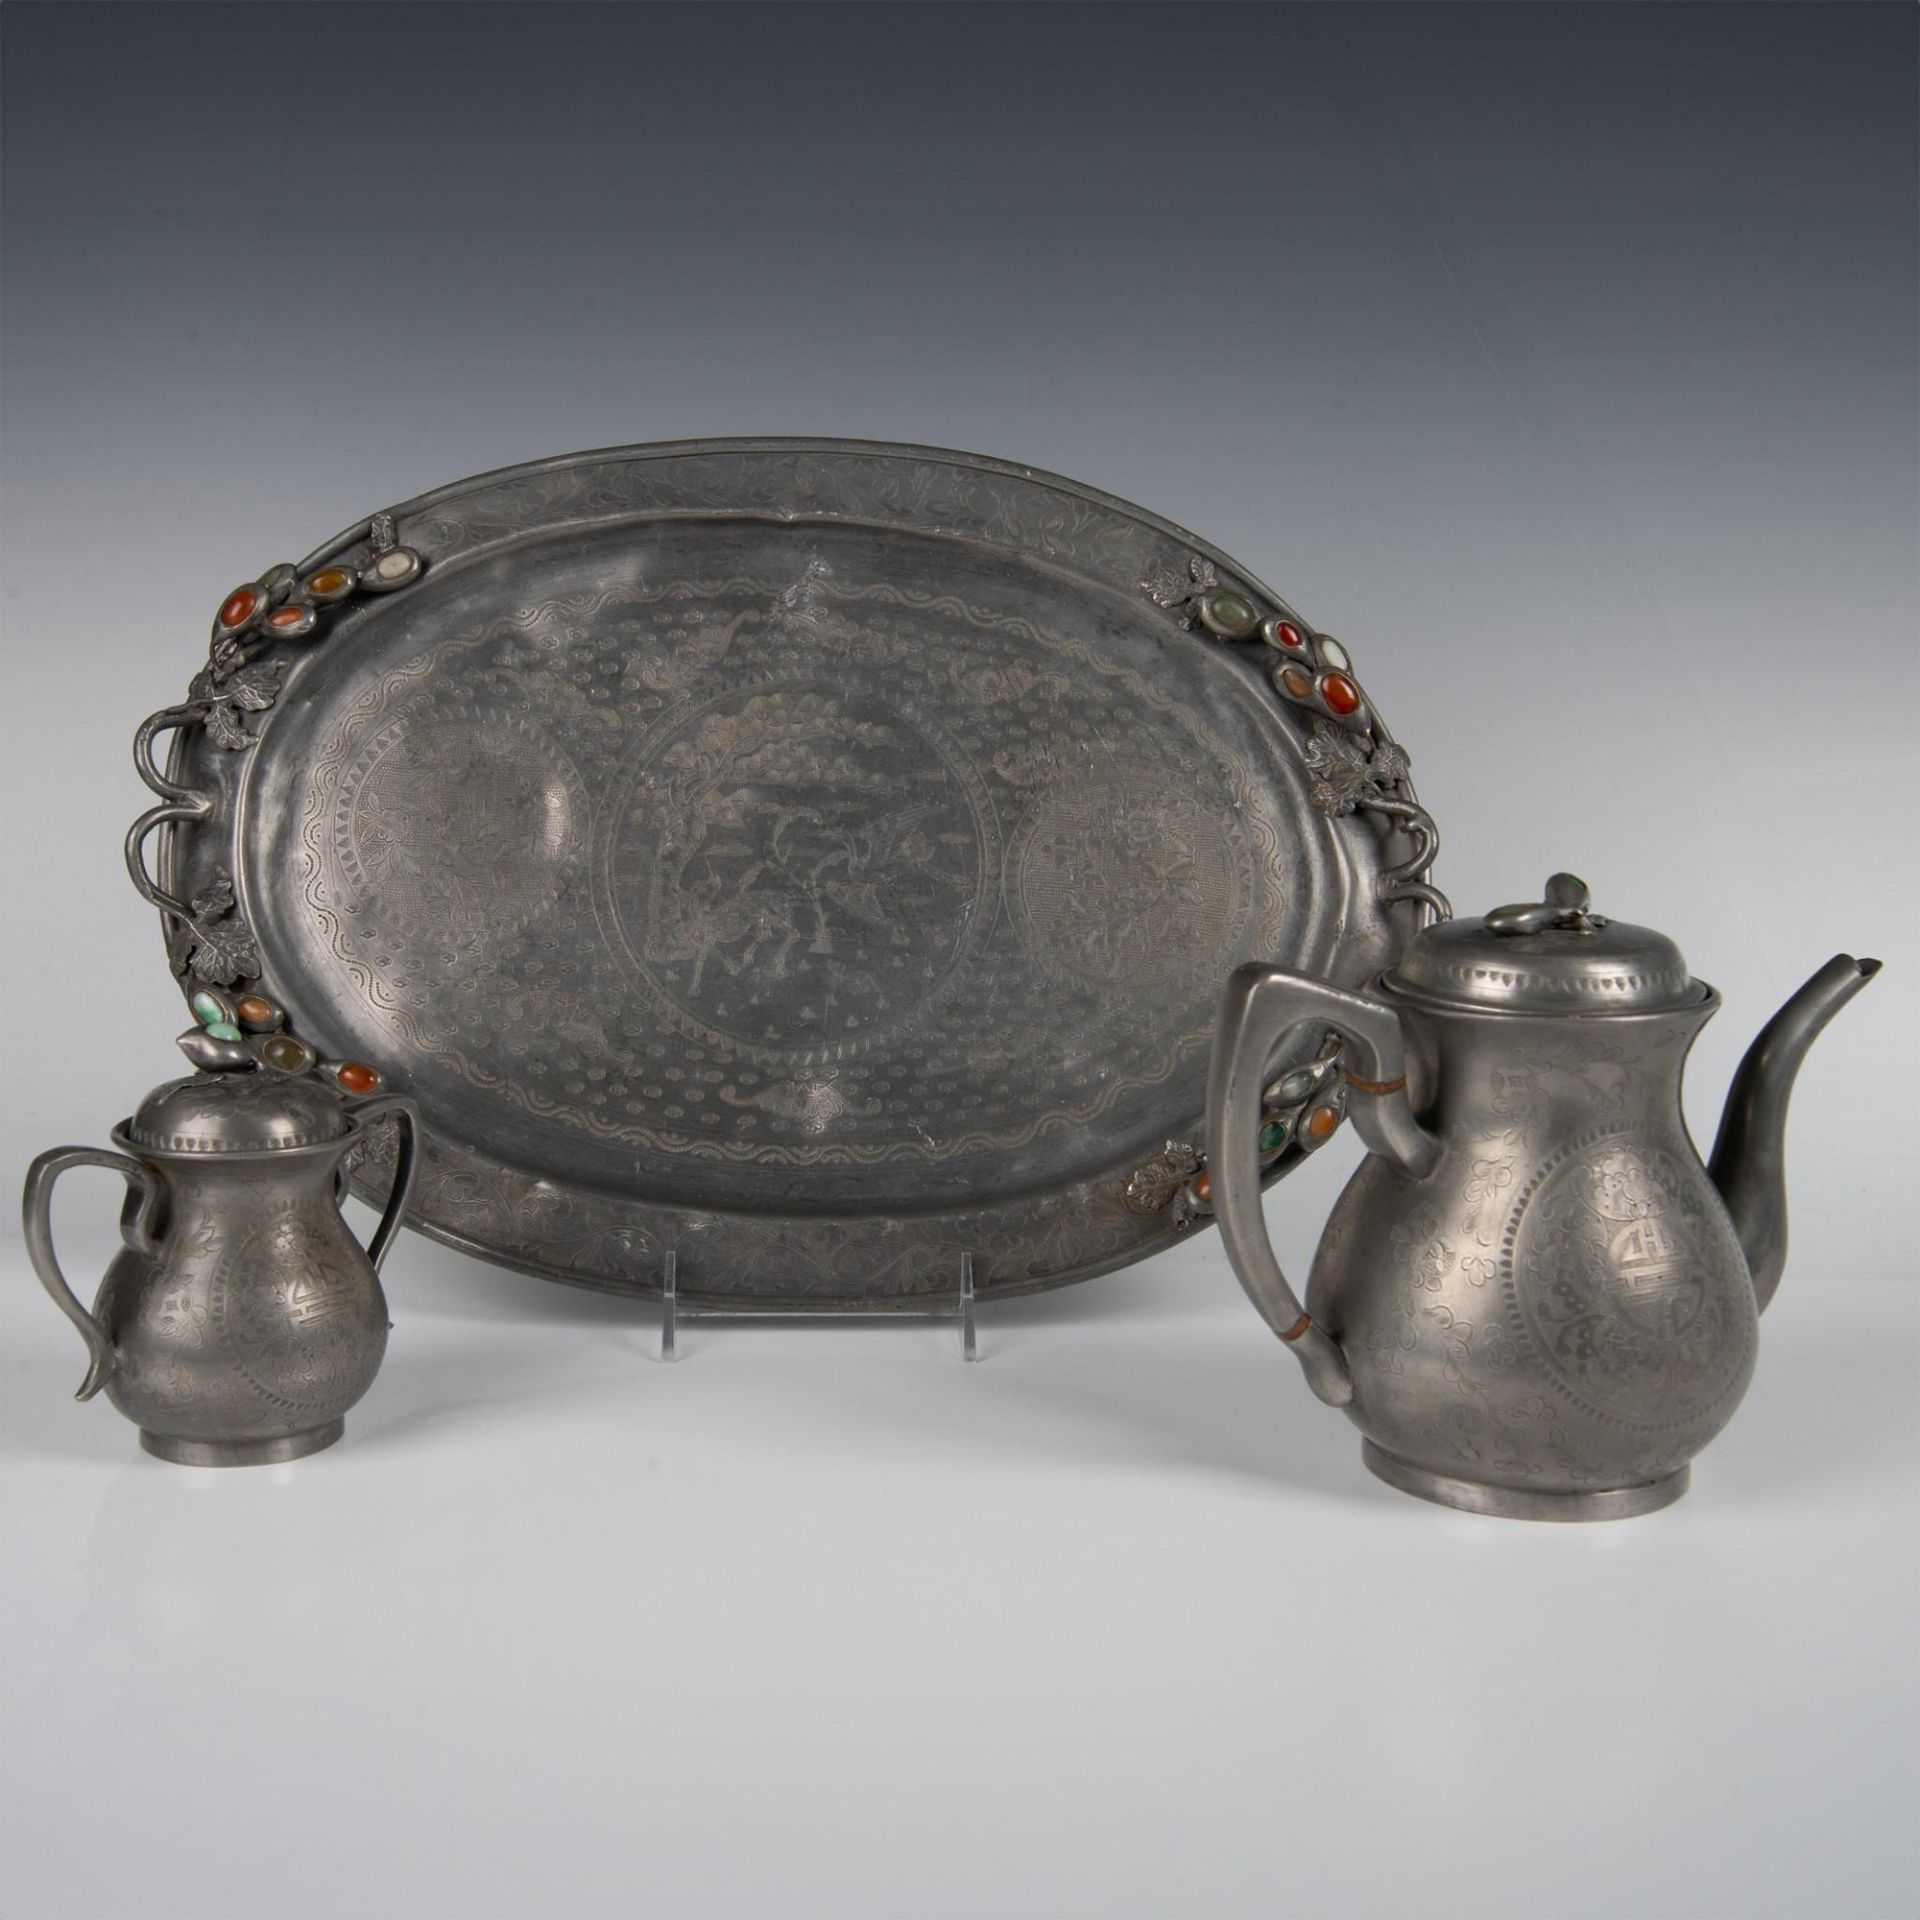 3pc Antique Chinese Pewter Tea Set - Image 2 of 18